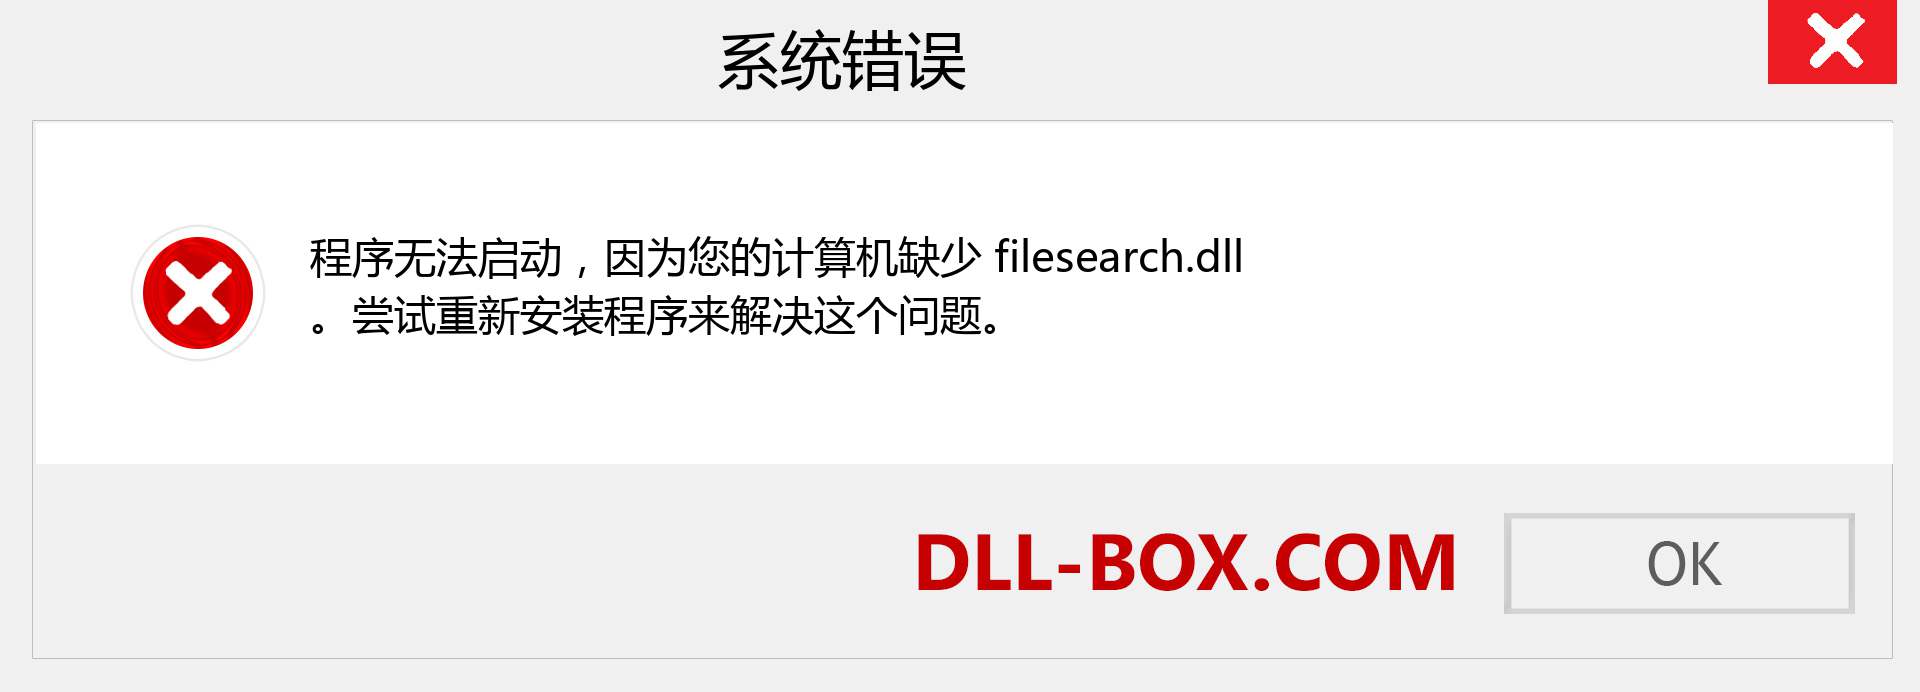 filesearch.dll 文件丢失？。 适用于 Windows 7、8、10 的下载 - 修复 Windows、照片、图像上的 filesearch dll 丢失错误